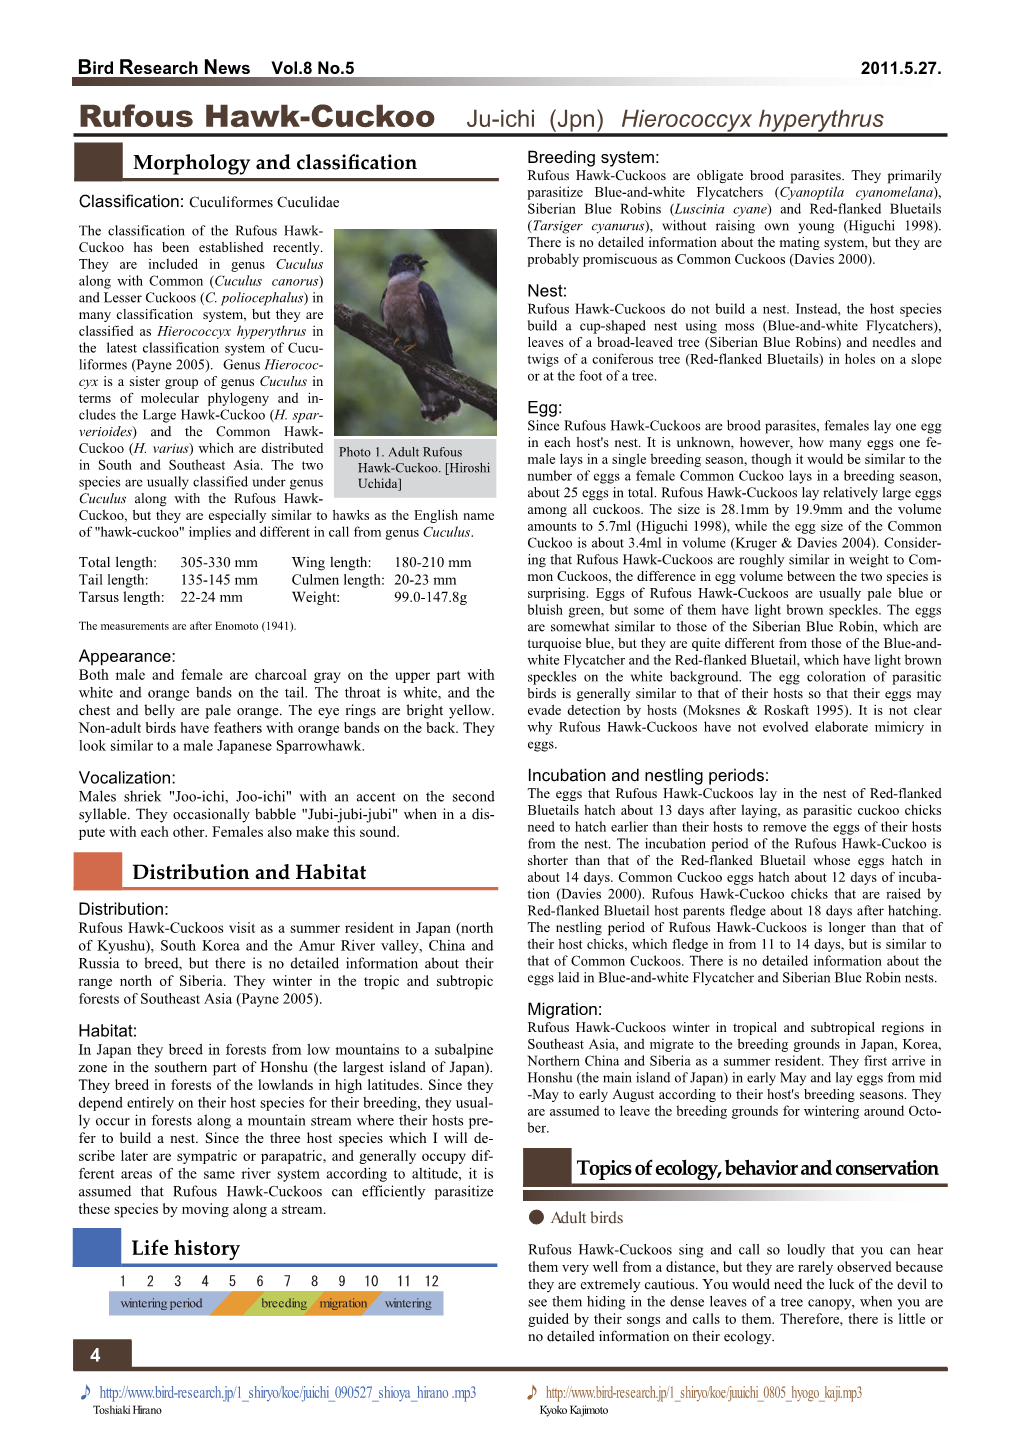 Rufous Hawk-Cuckoo Ju-Ichi (Jpn) Hierococcyx Hyperythrus Morphology and Classiﬁcation Breeding System: Rufous Hawk-Cuckoos Are Obligate Brood Parasites